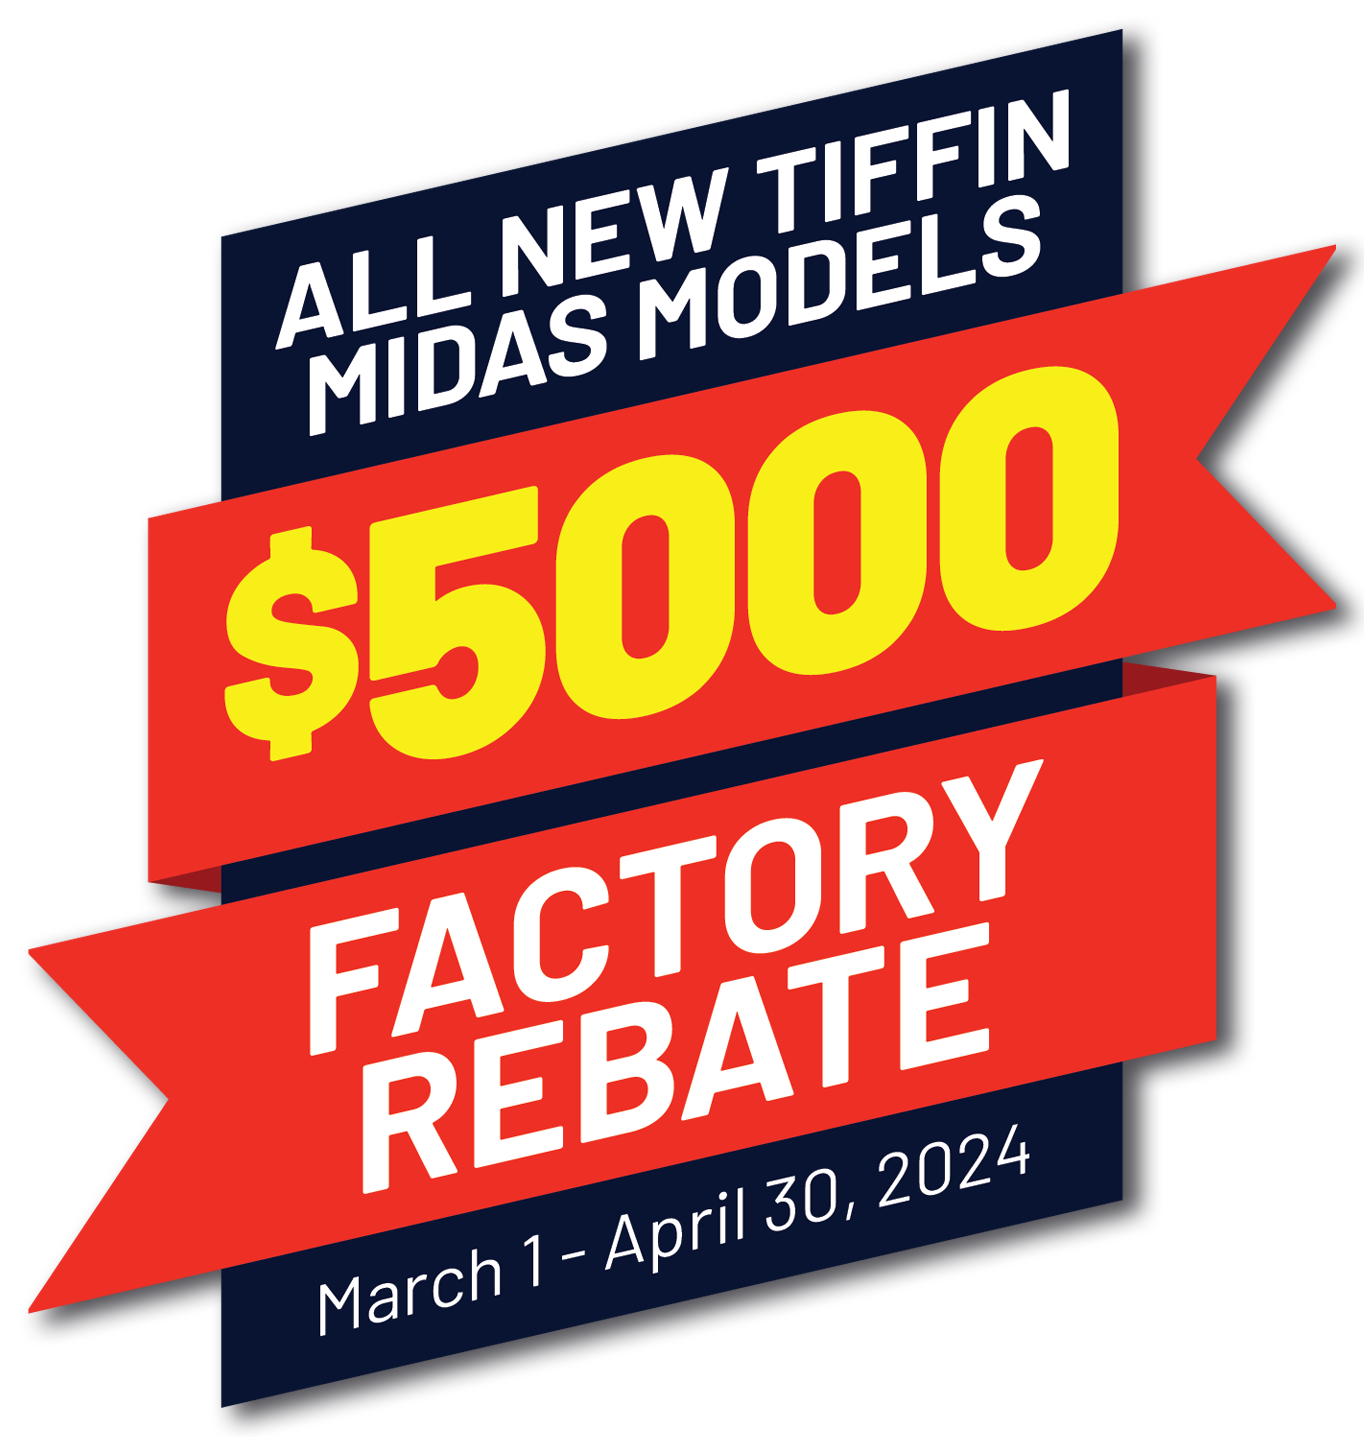 $5,000 Factory Rebate on all New Tiffin Midas Models.